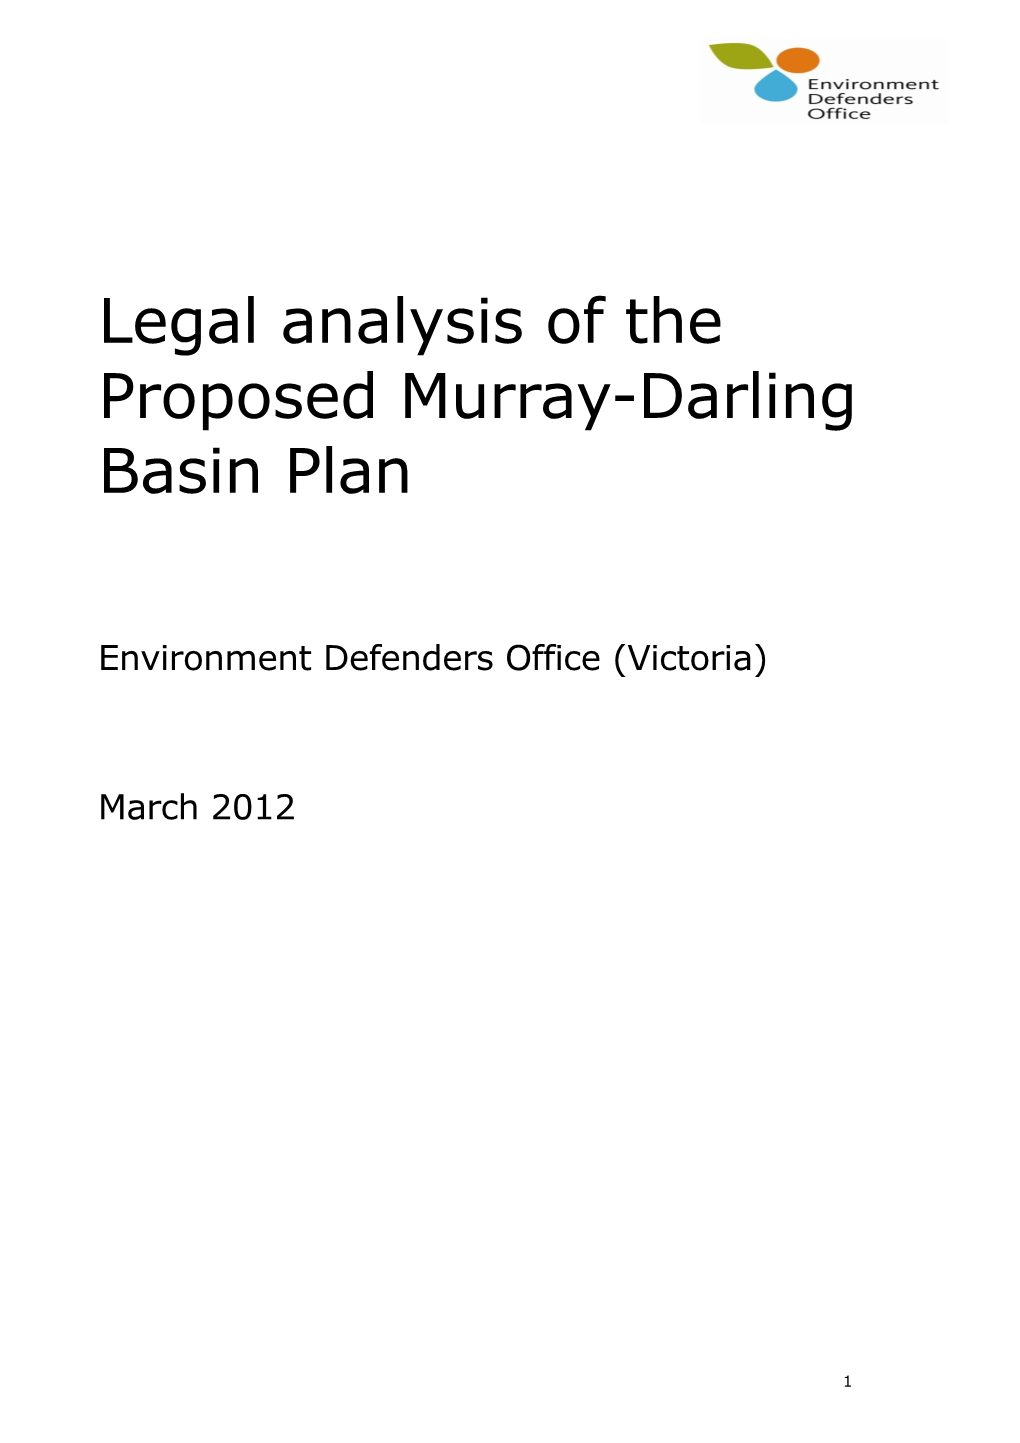 EDO Legal Analysis of the Draft Murray-Darling Basin Plan